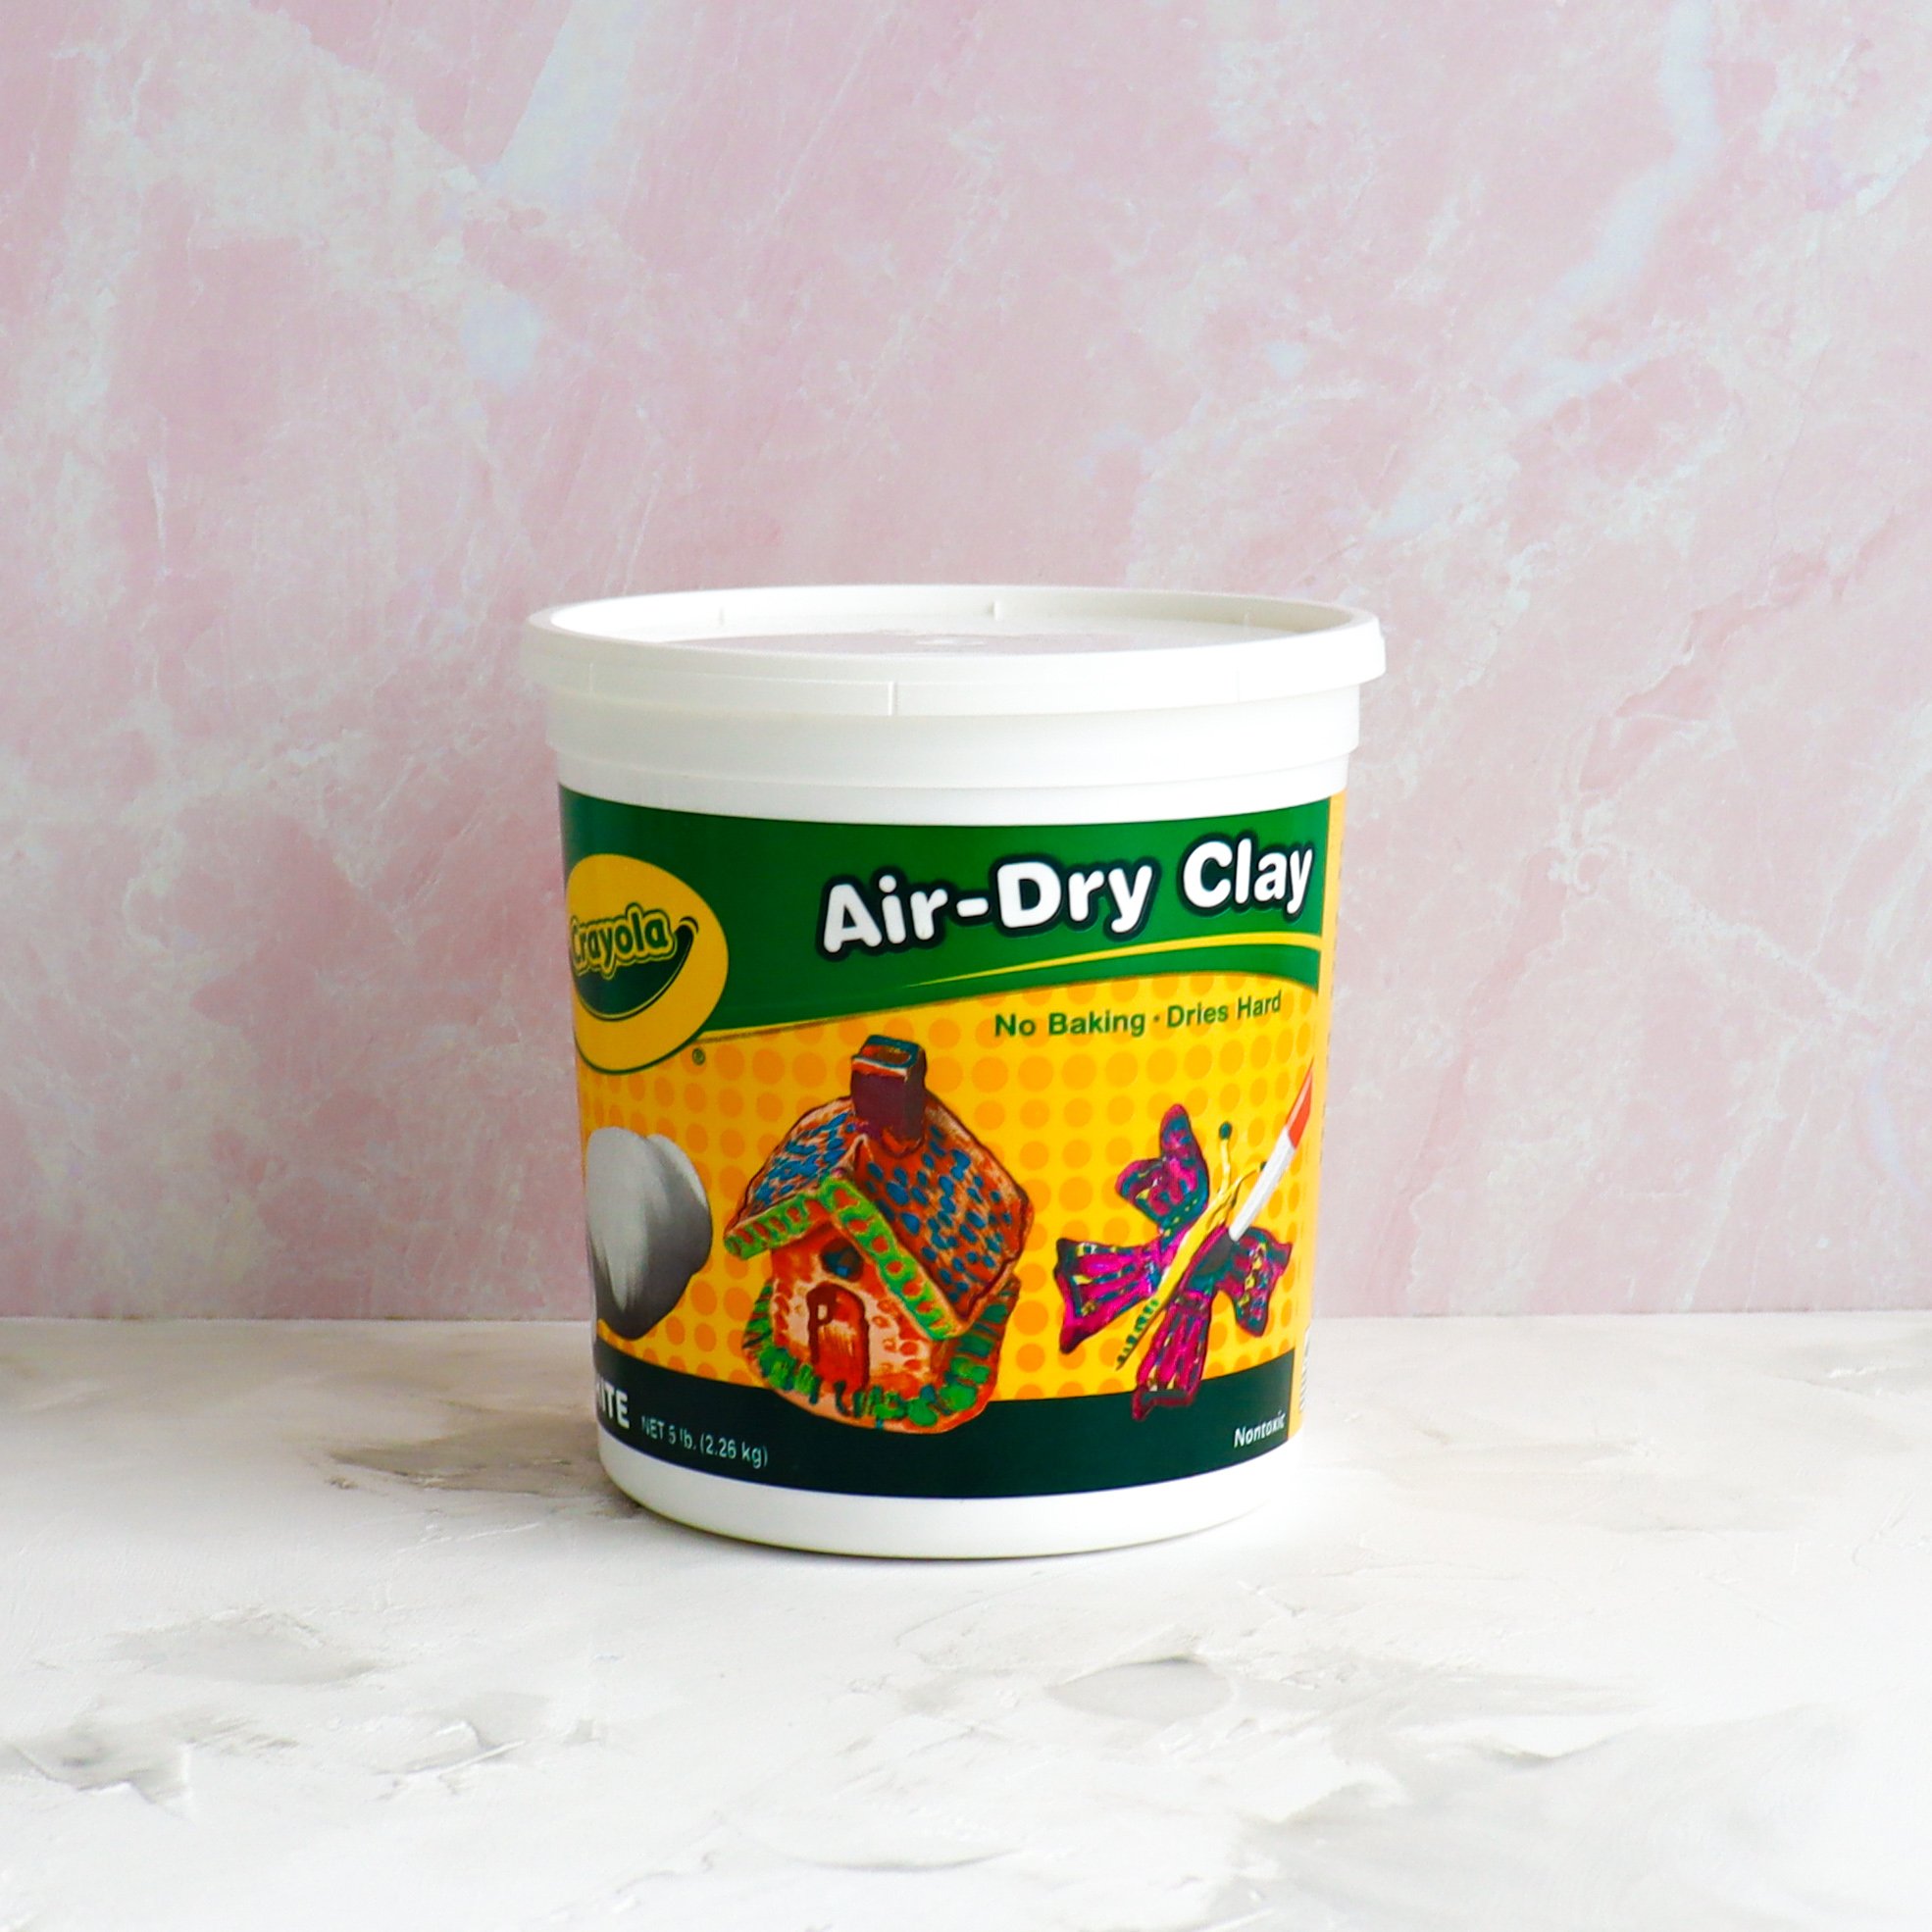 air dry clay, no baking air